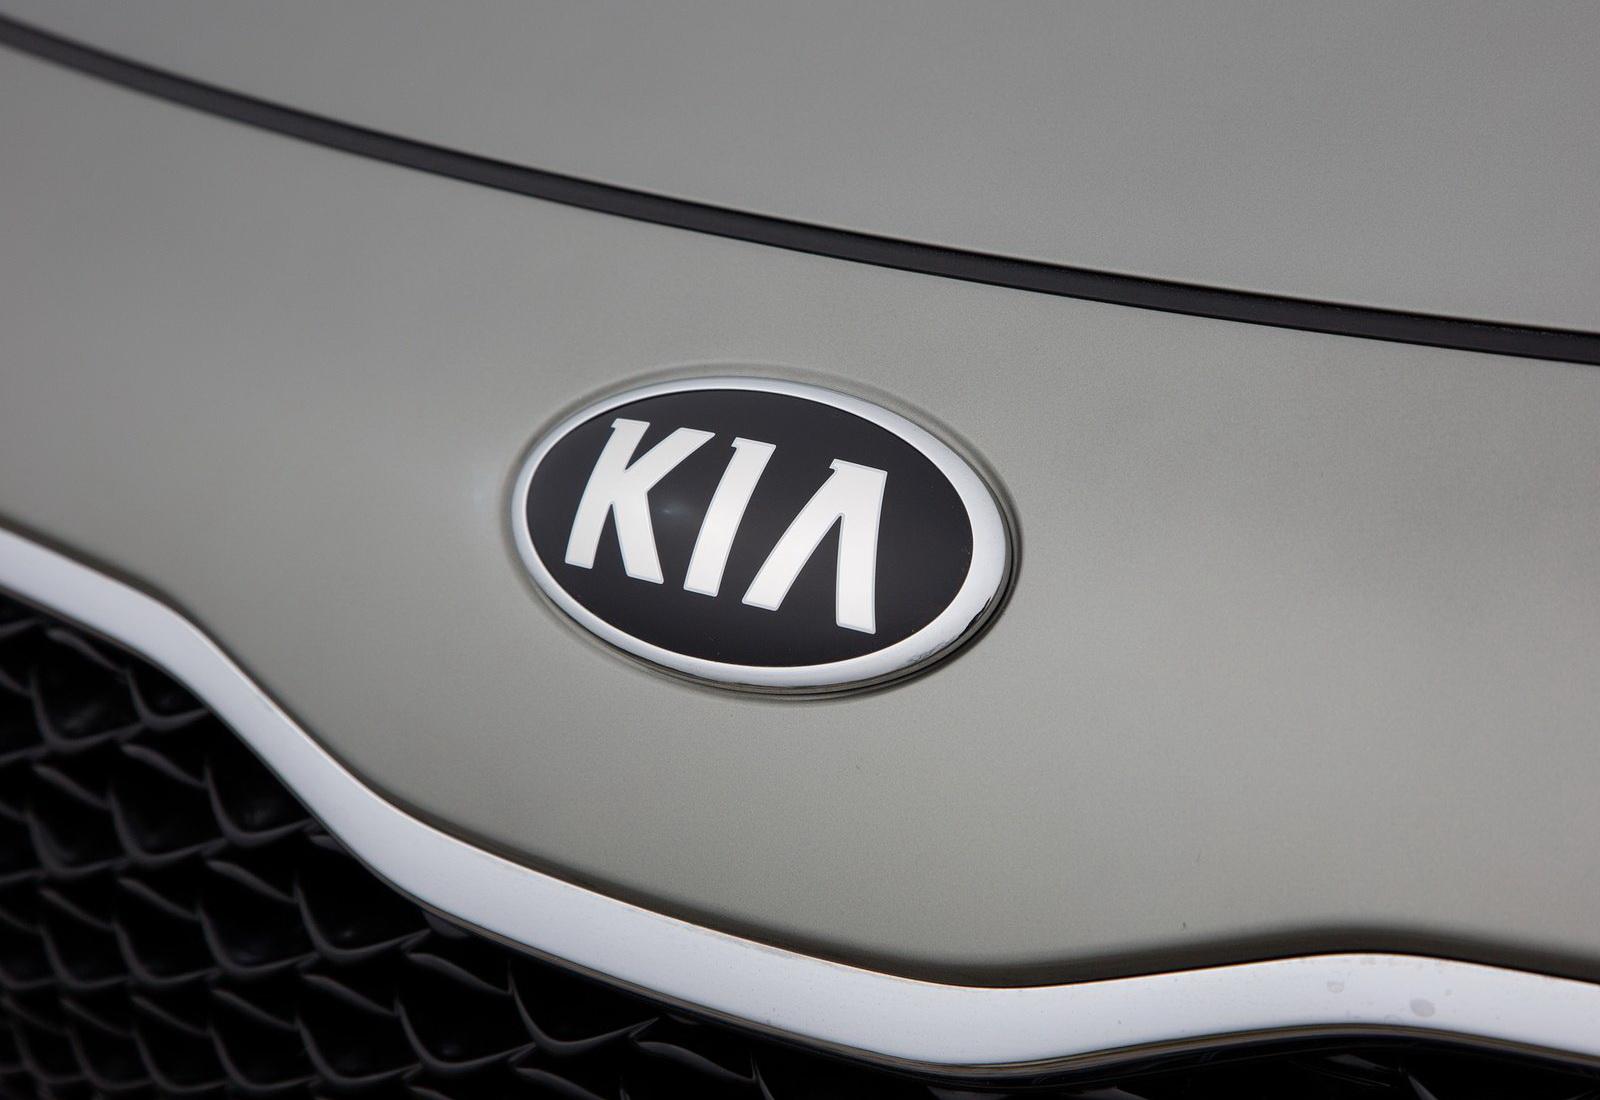 Kia Logo, Kia Car Symbol Meaning and History. Car Brand Names.com